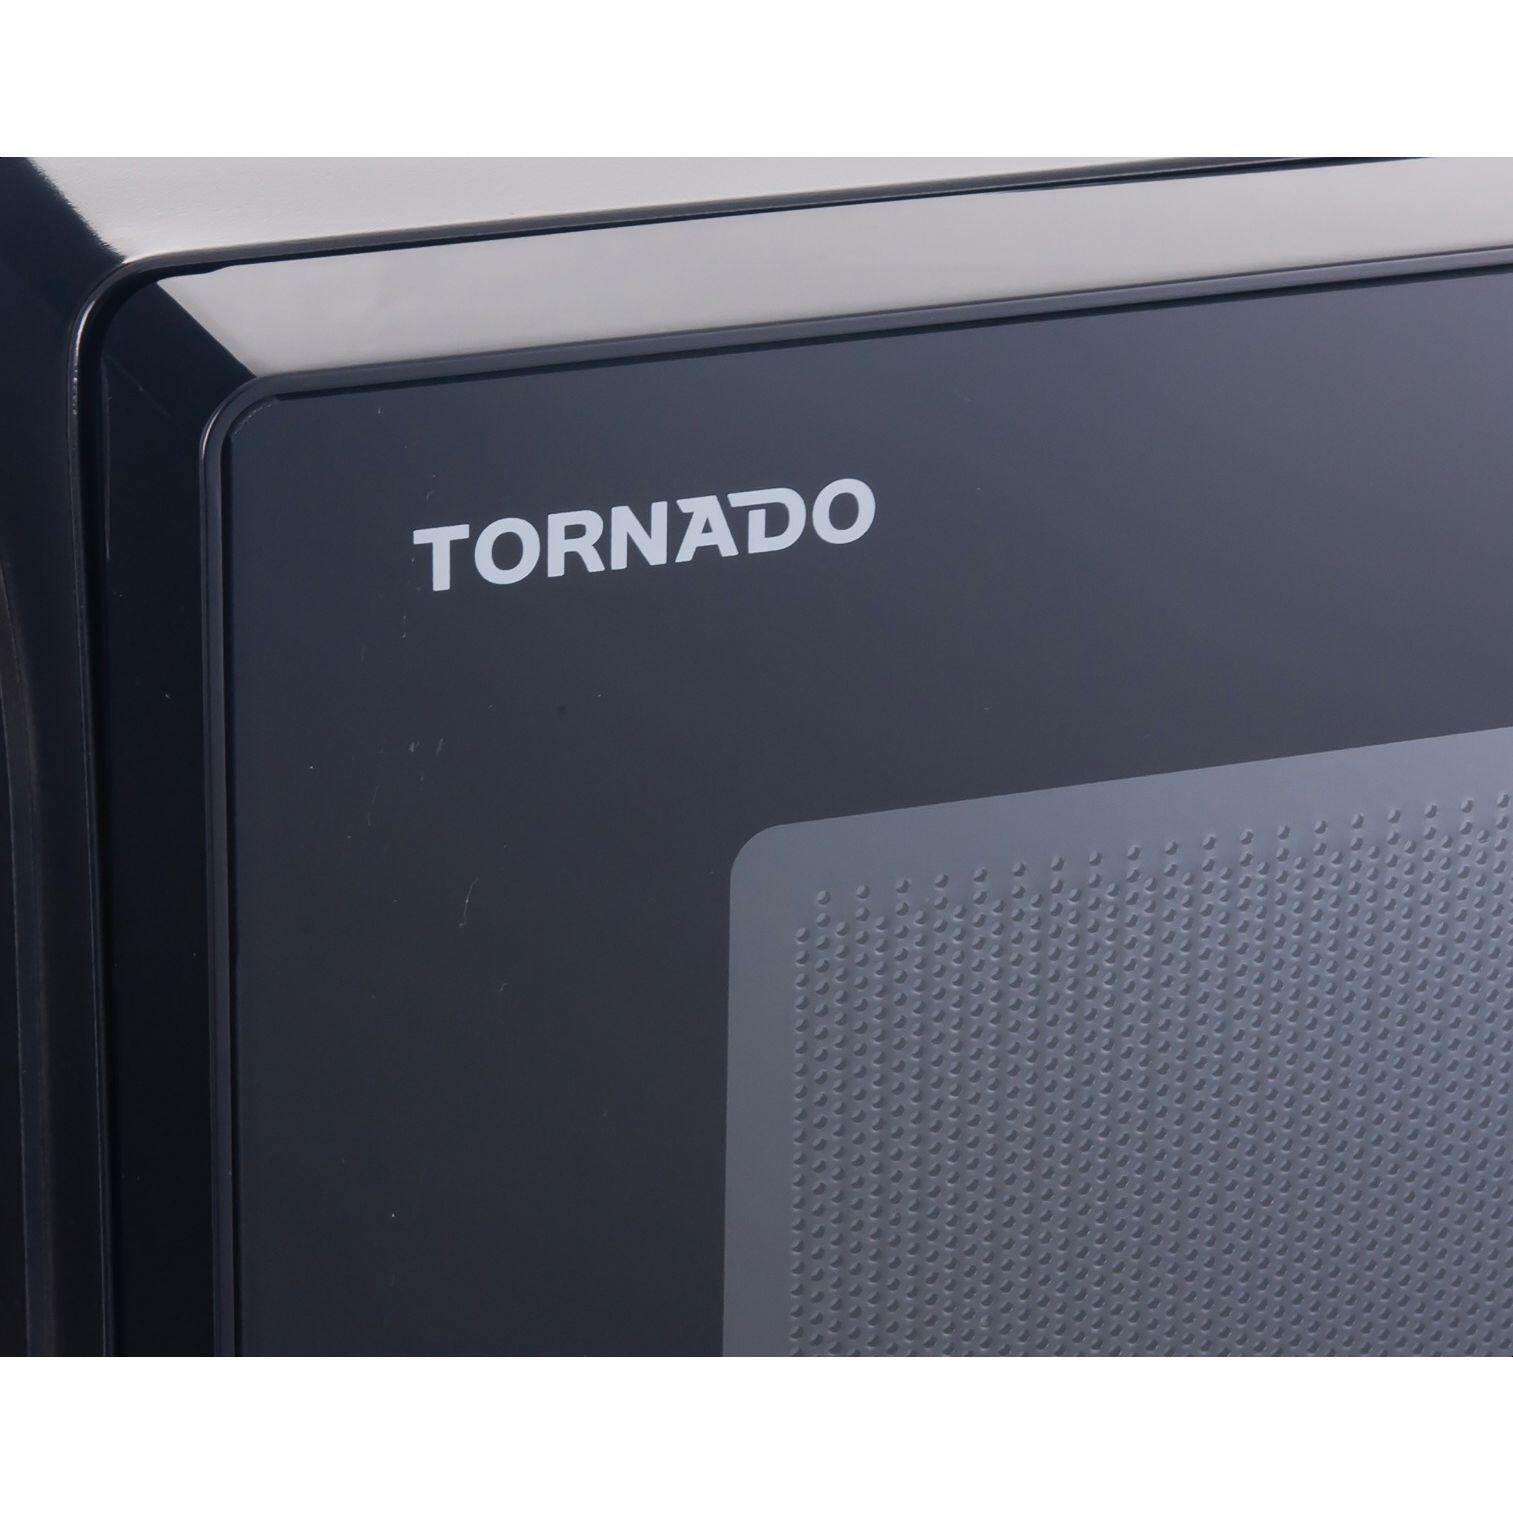 Tornado Microwave, 20 Liter, 700 Watt, Black - TM-20MK